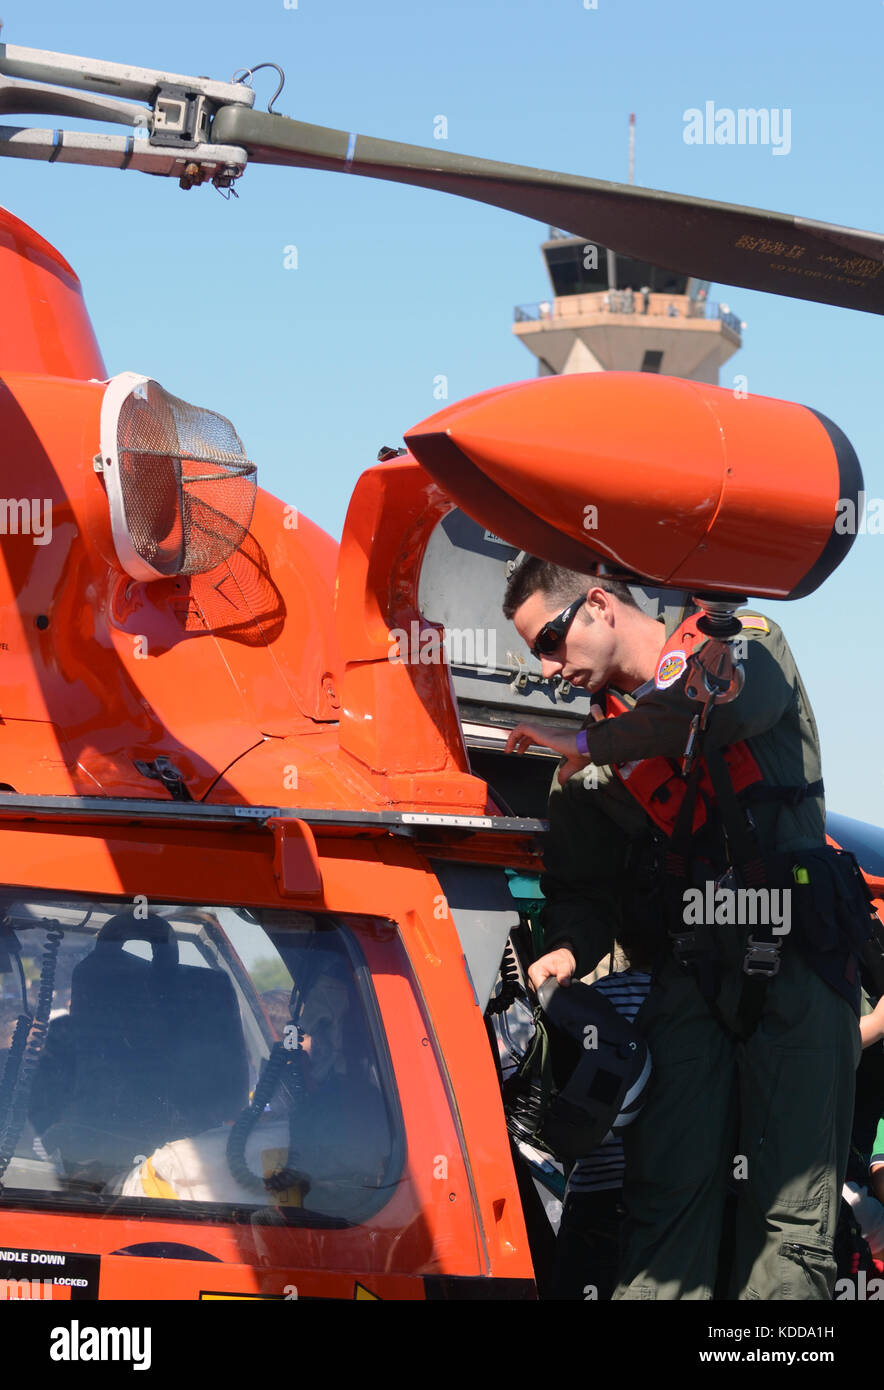 MIAMI - NOVEMBER 3: US Coast Guard pilot prepareshis helicopter for flight on November 3, 2012 at Opa Locka airport in Miami, Florida Stock Photo